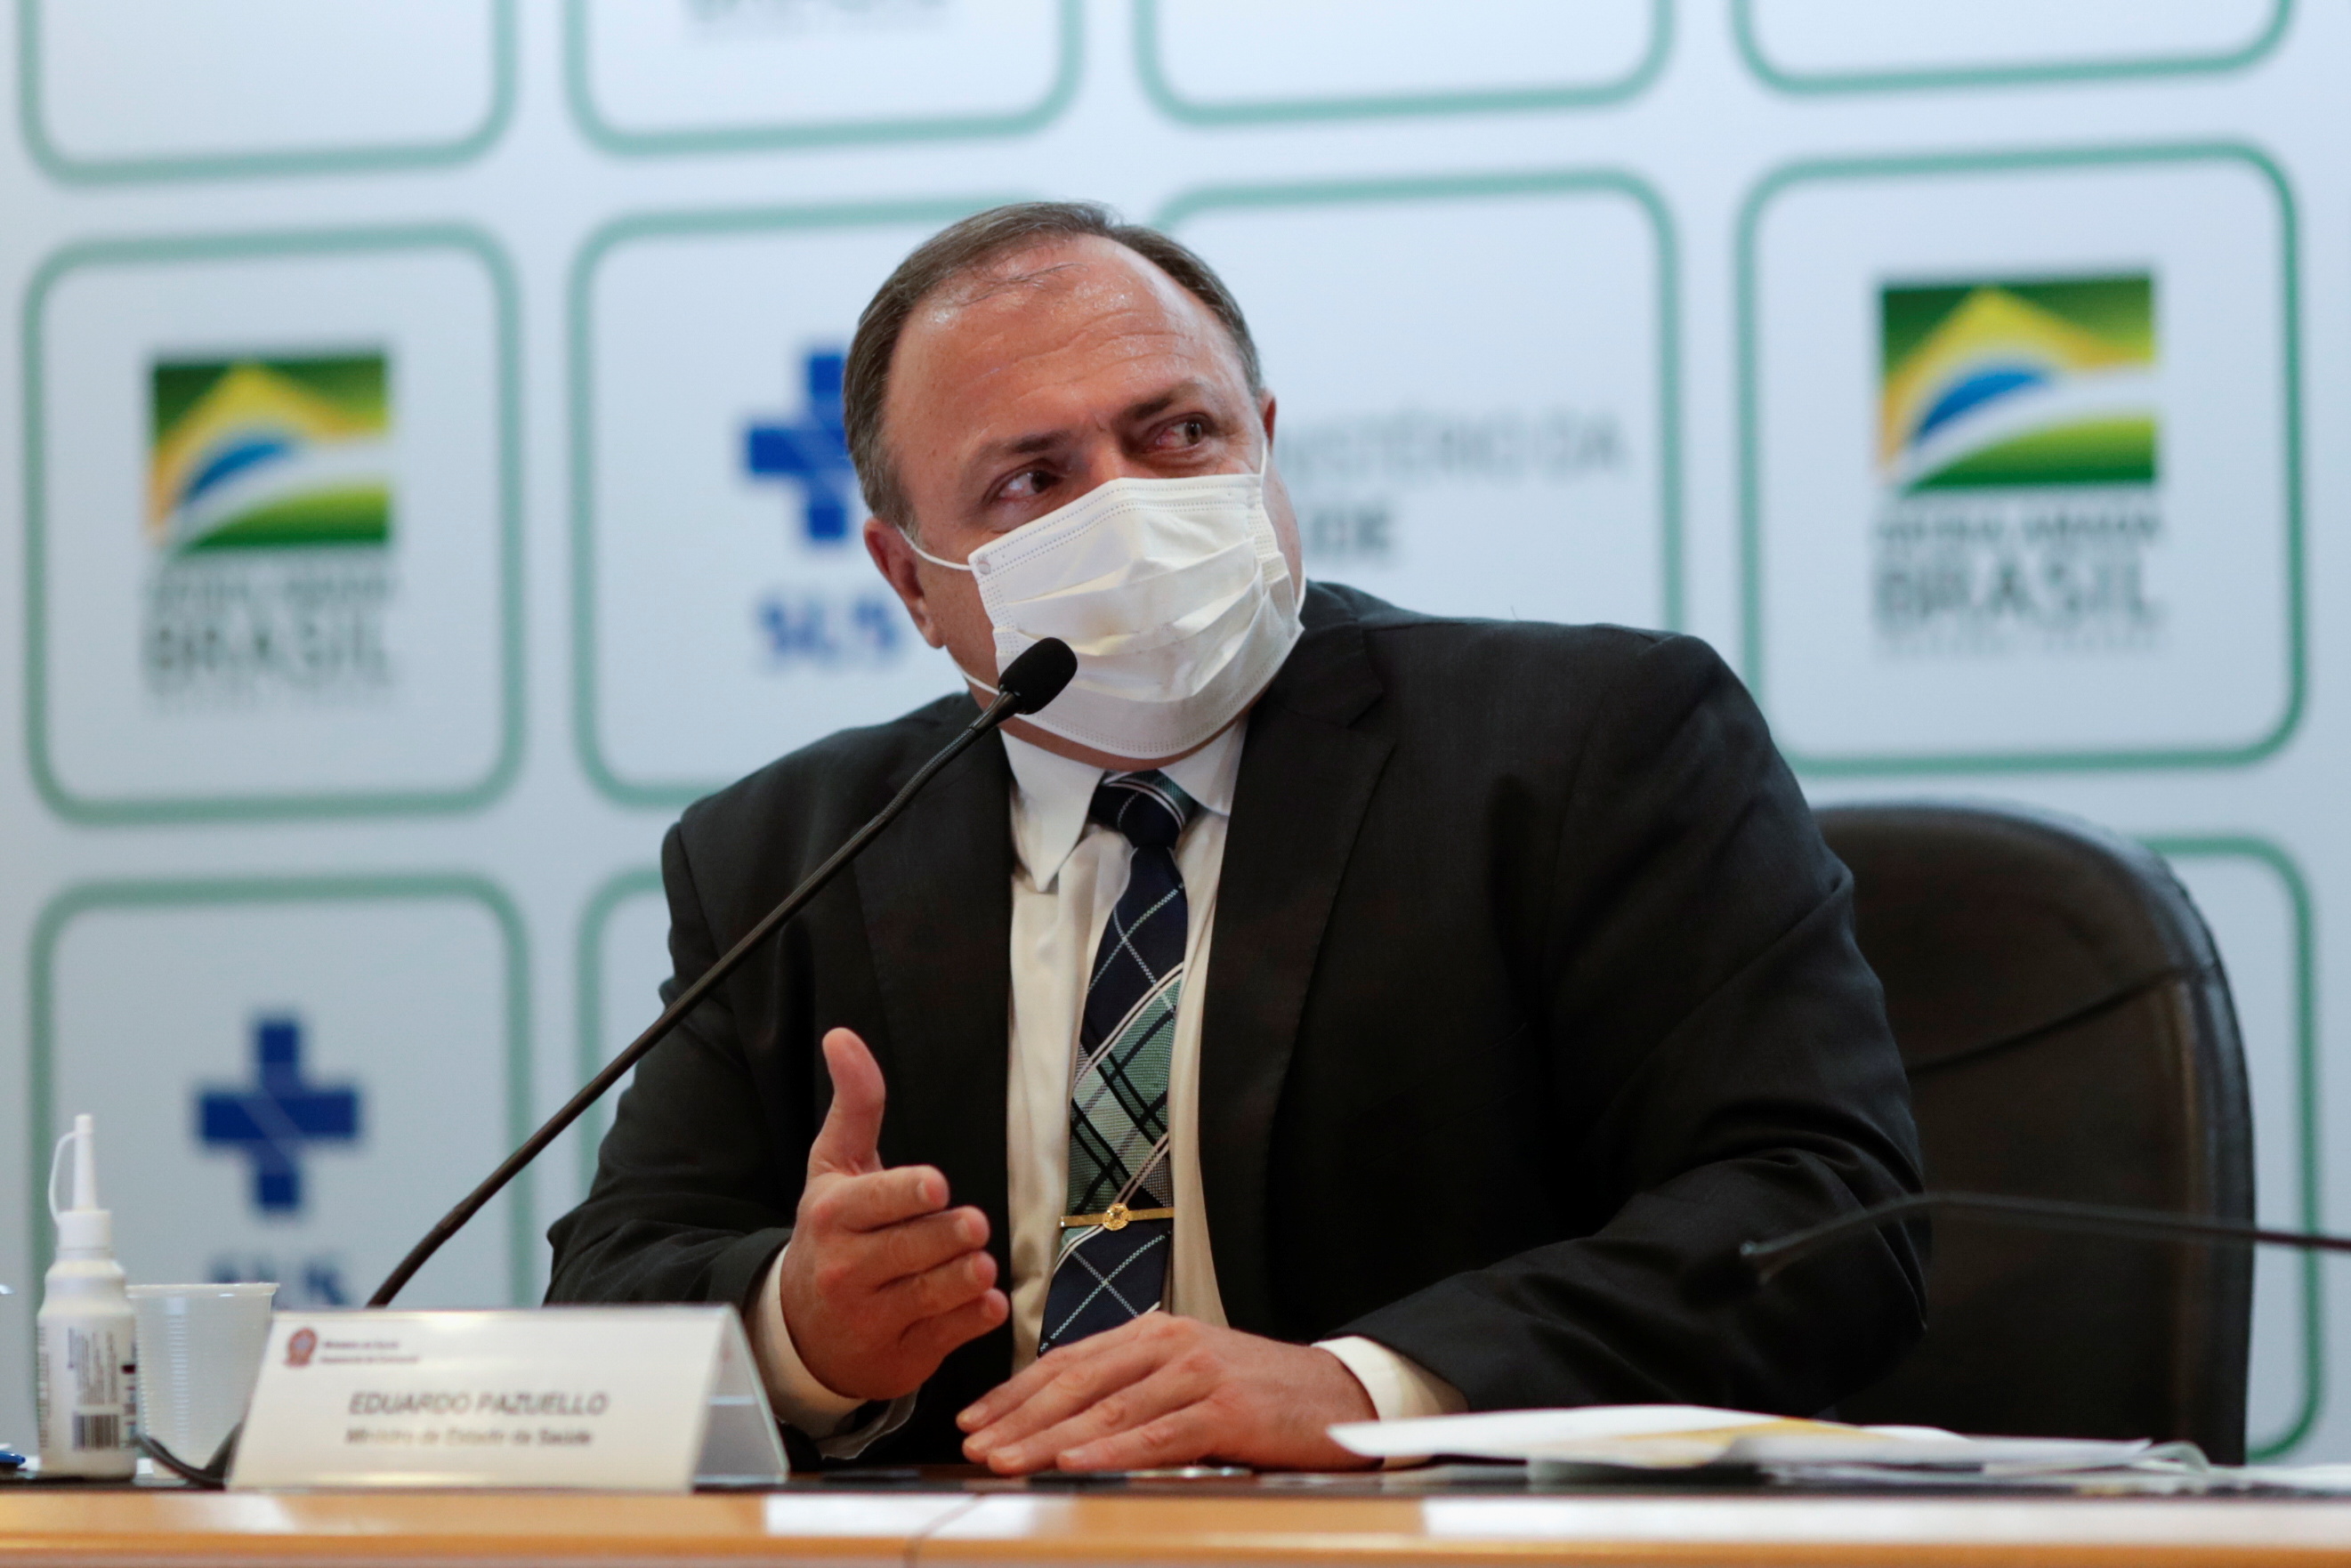 Brazil's Health Minister Pazuello attends a news conference in Brasilia